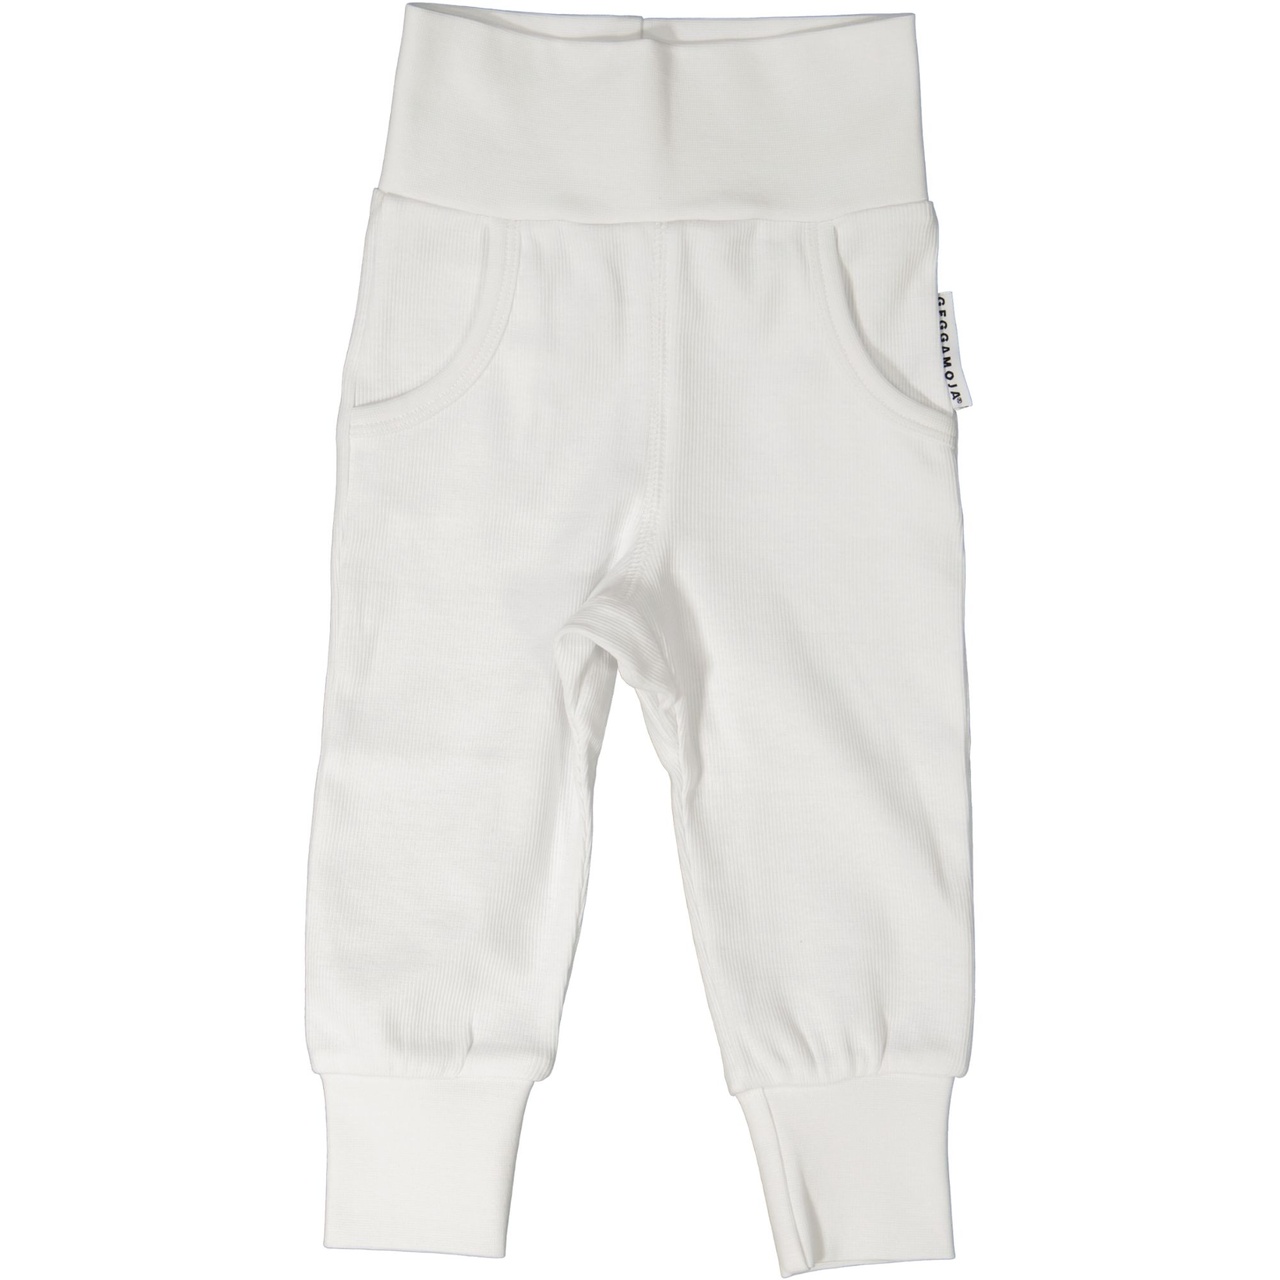 Baby trouser White  74/80